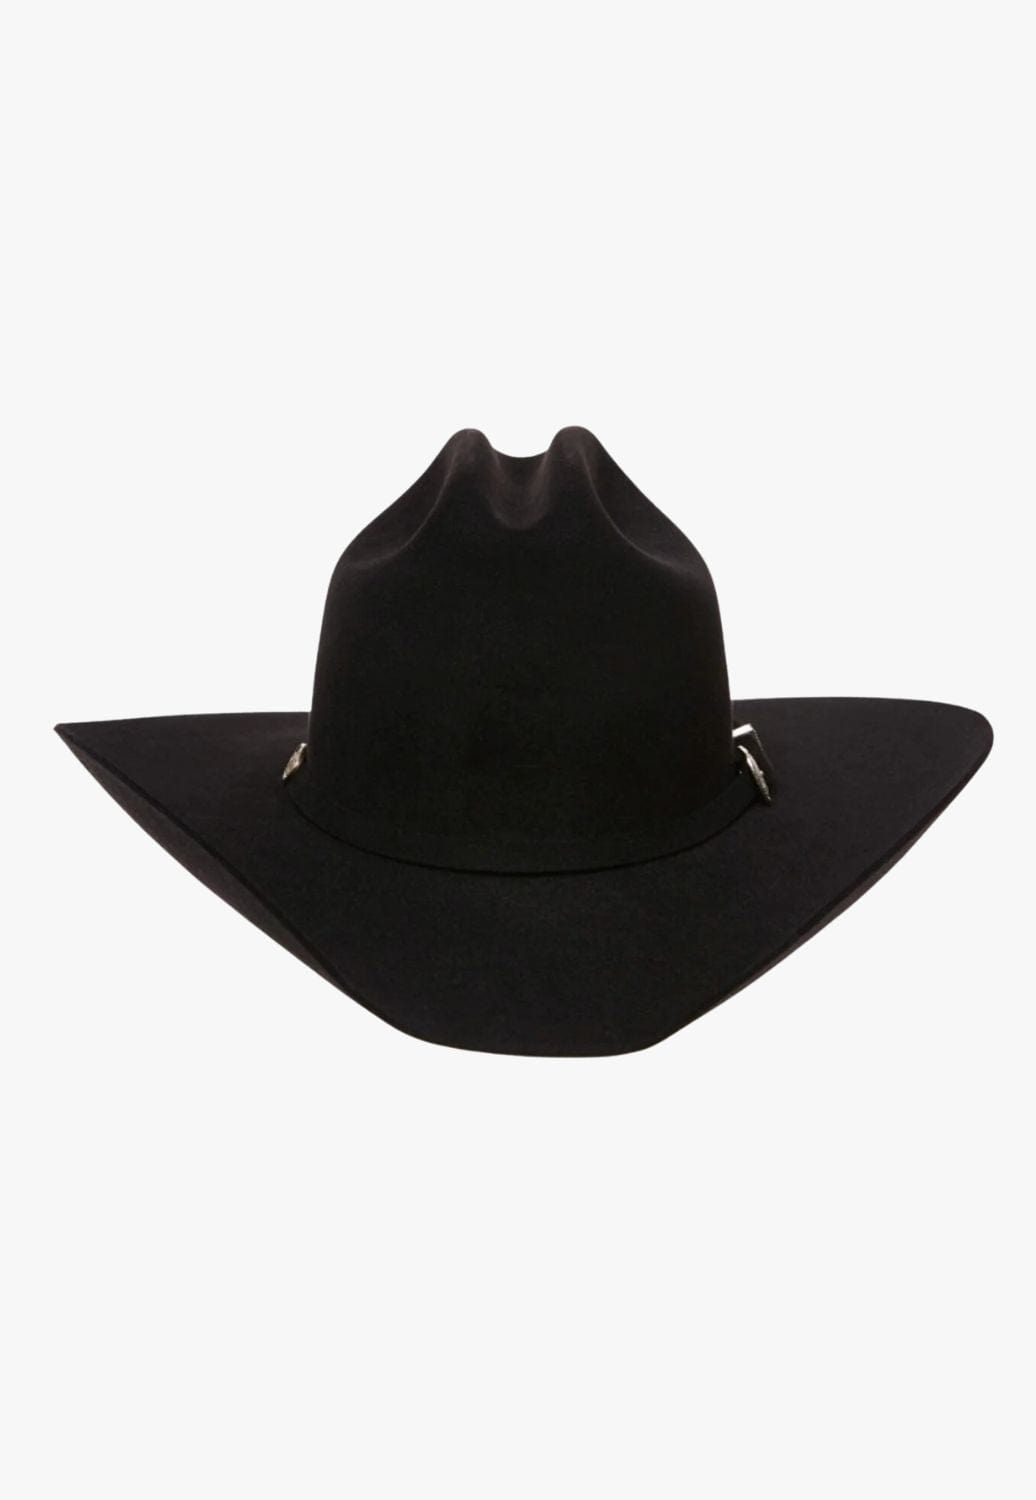 Statesman Hats - Statesman Cowboy Hats Australia